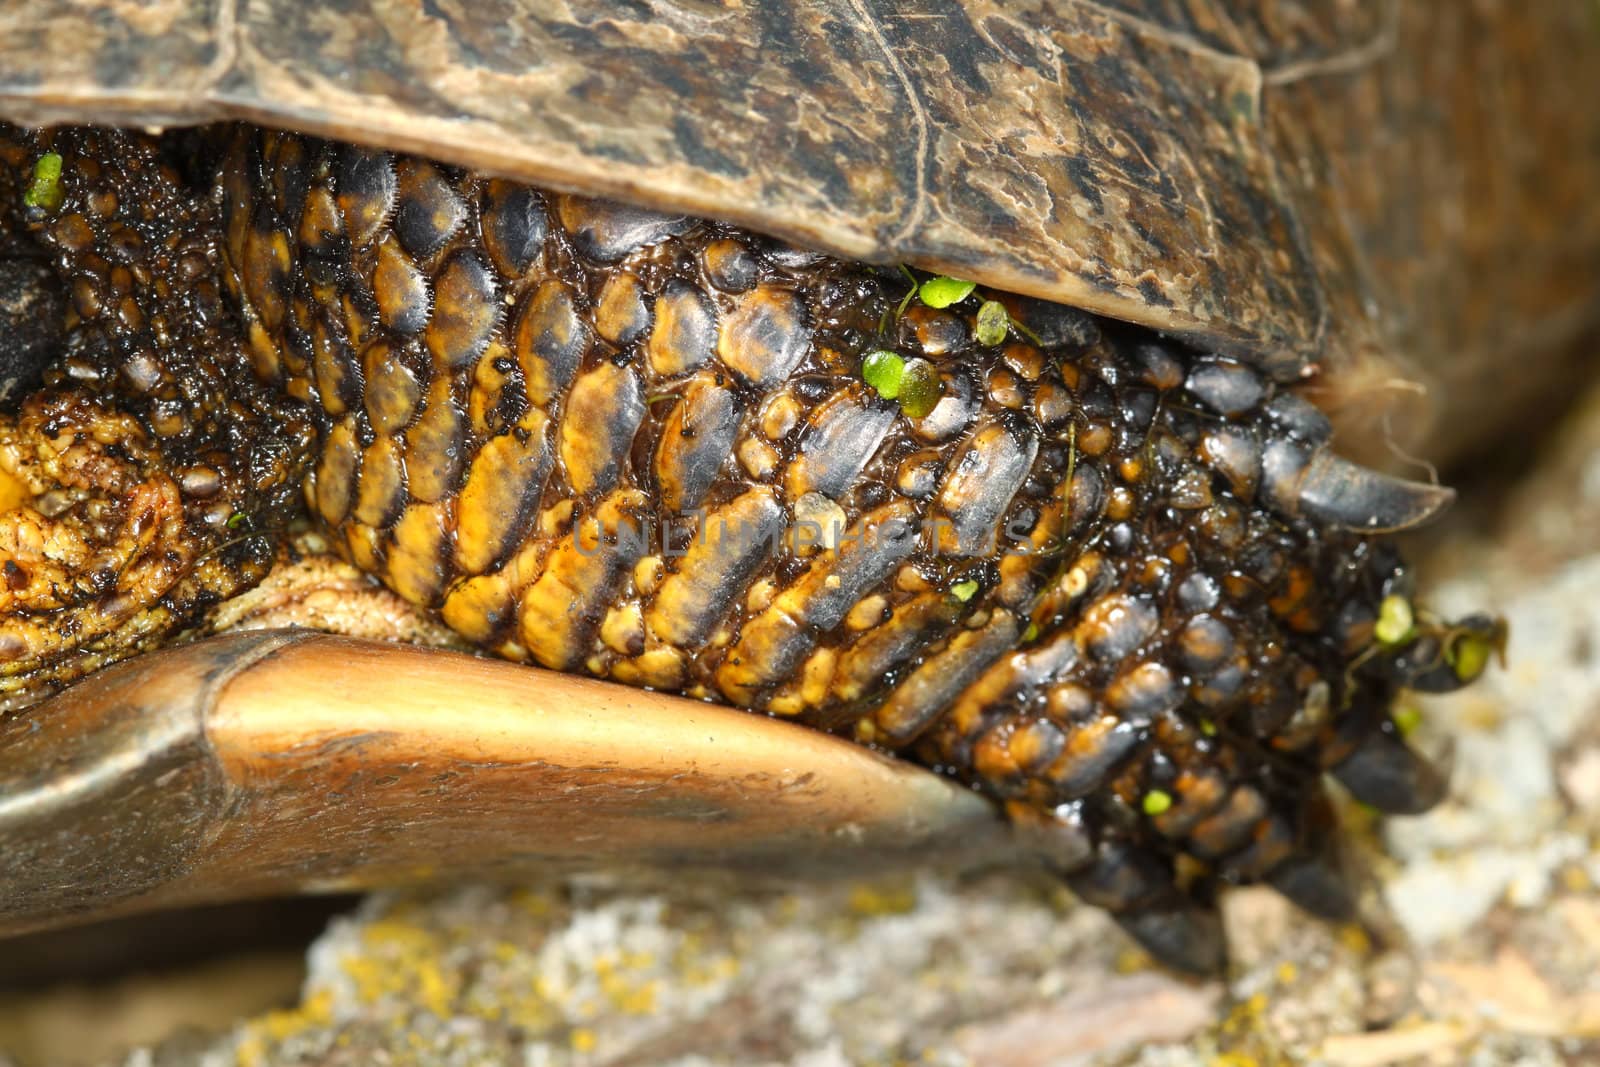 Protective scales cover the leg of a Blandings Turtle (Emydoidea blandingii).